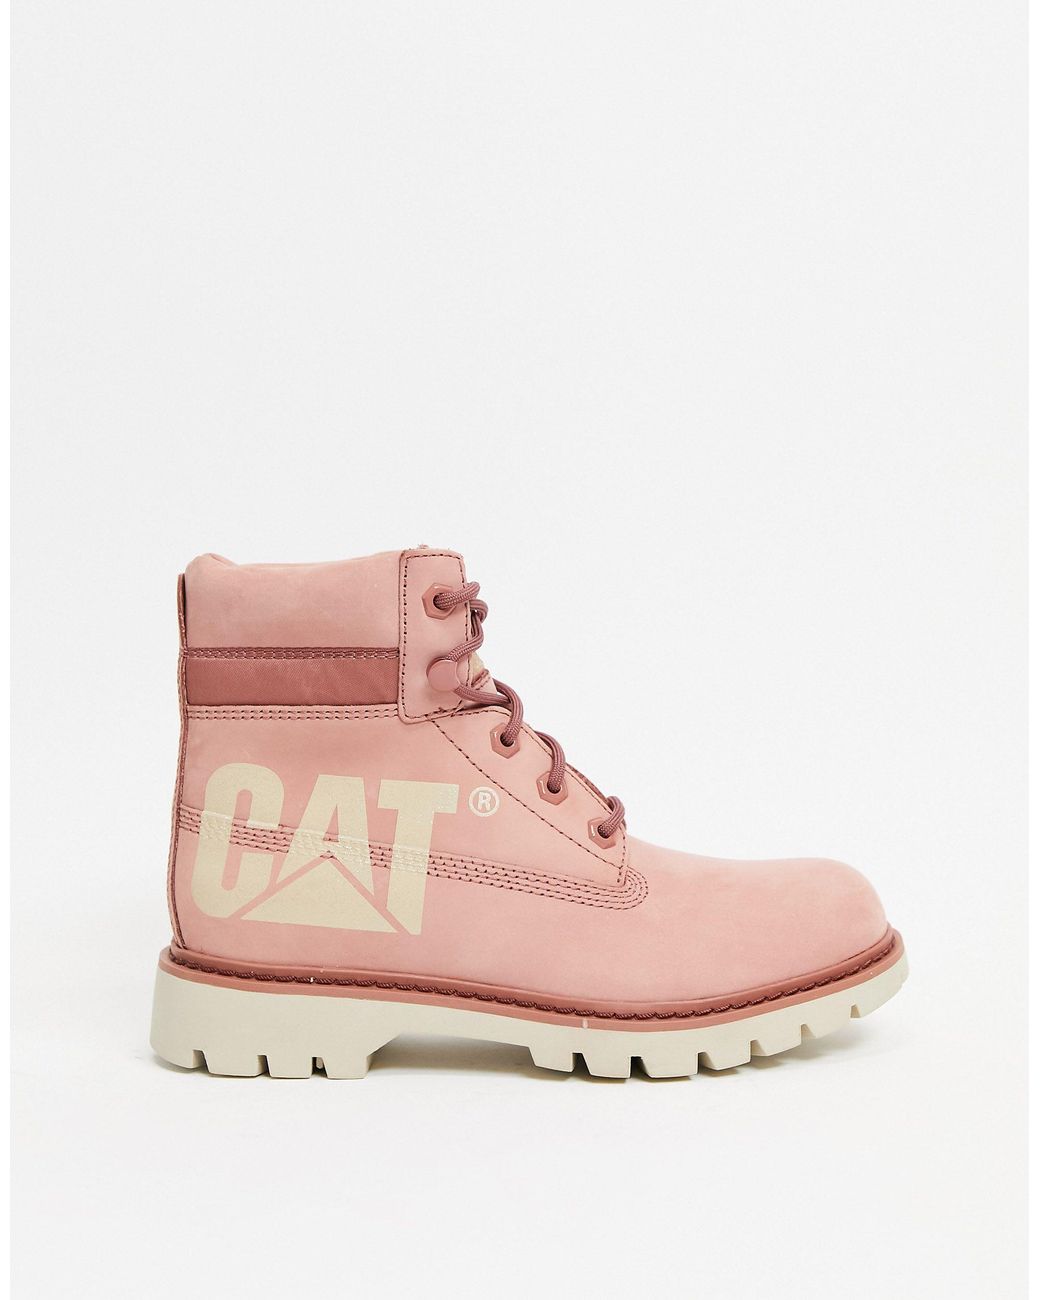 Caterpillar Caterpillar Lyric Bold Leather Boots in Pink | Lyst Australia